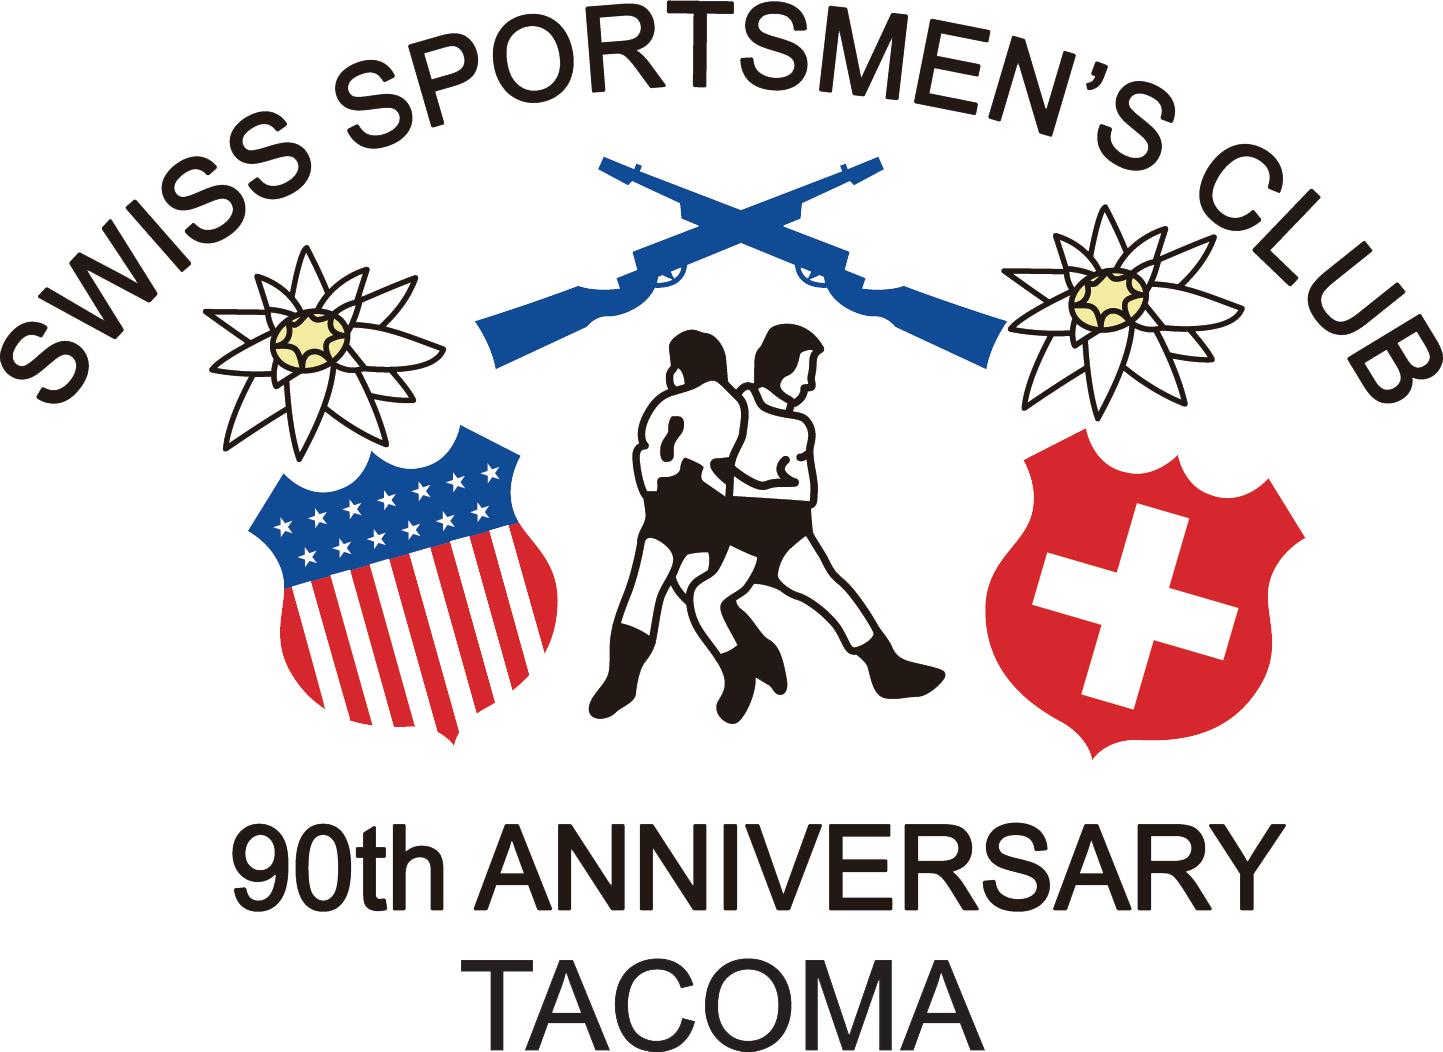 Swiss Sportsmen's Club of Tacoma